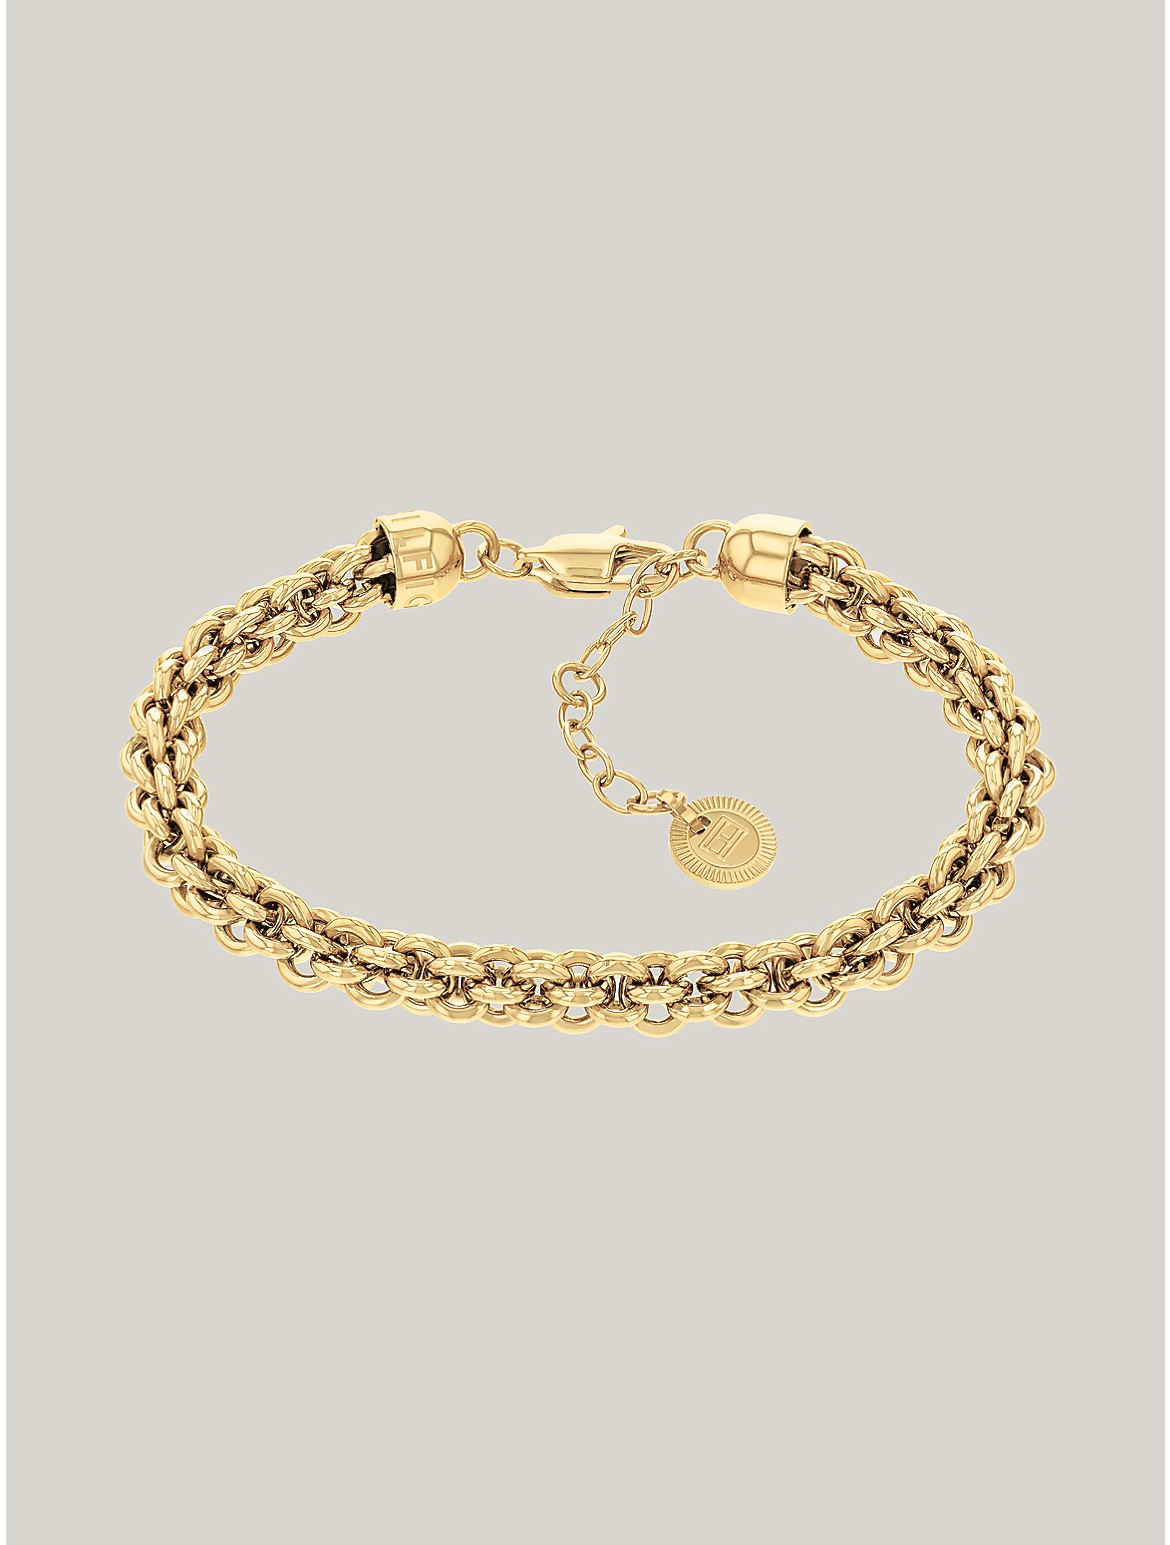 Tommy Hilfiger Women's Gold-Tone Intertwined Chain Bracelet